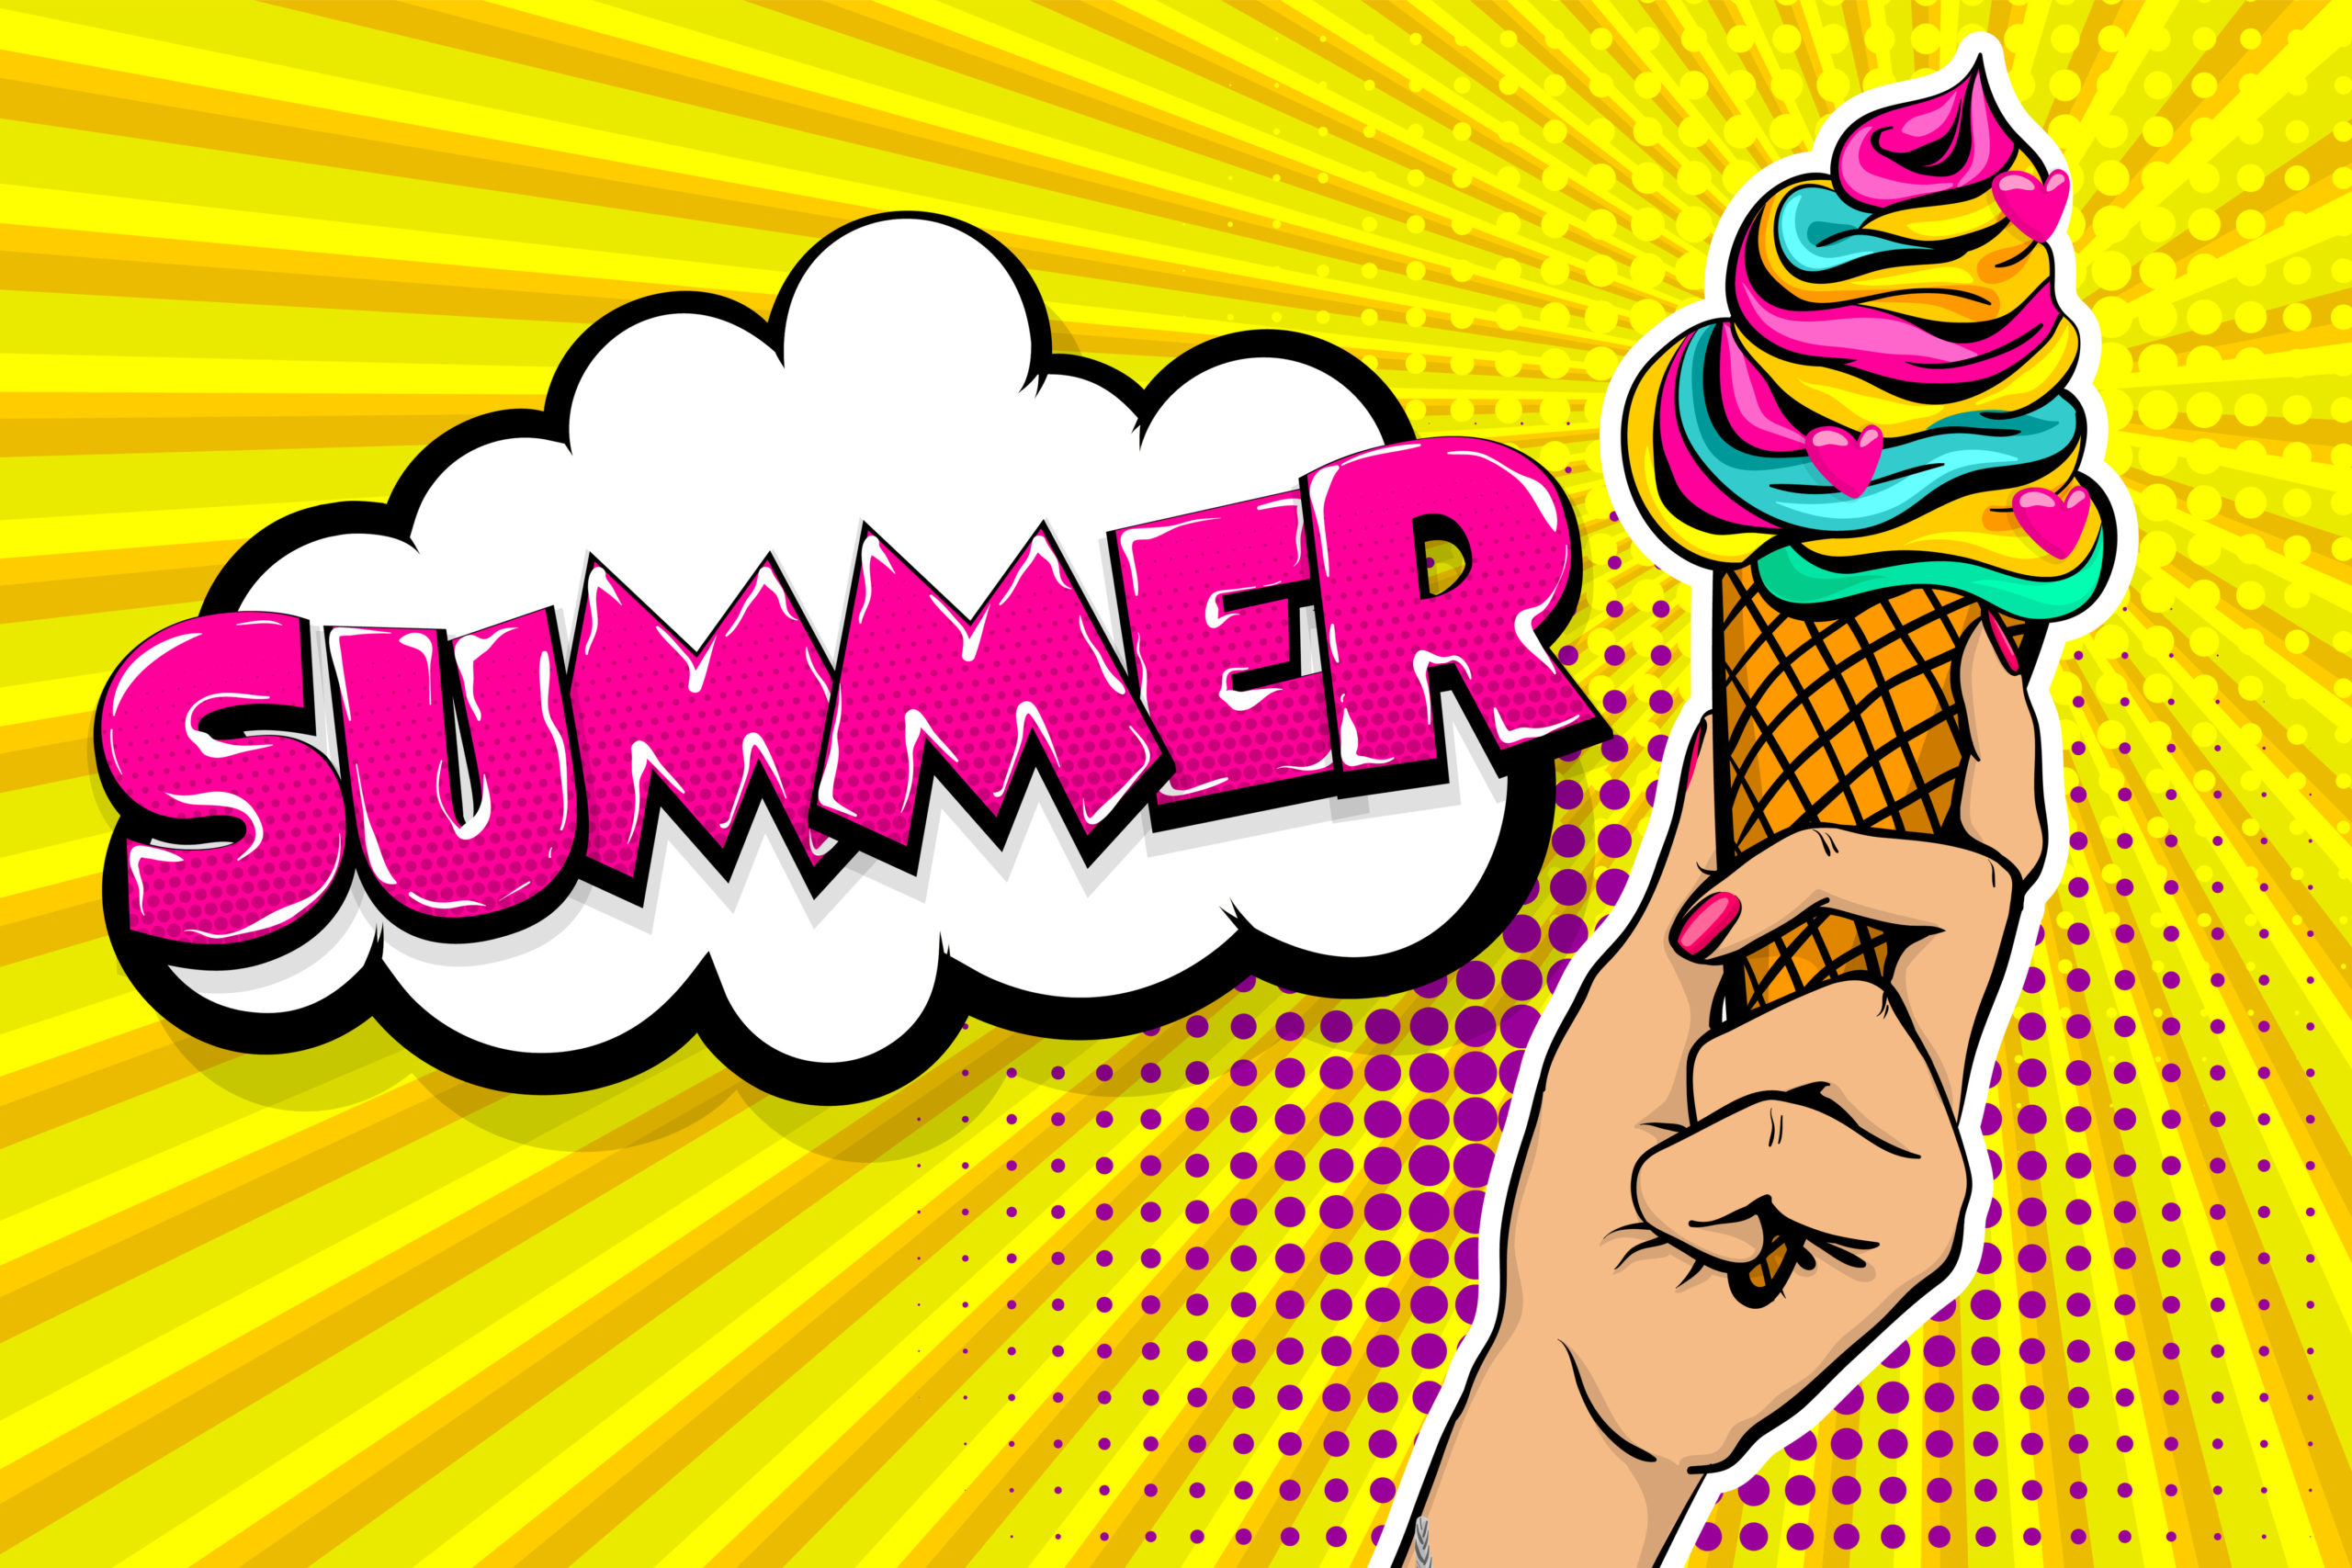 icecream-summer